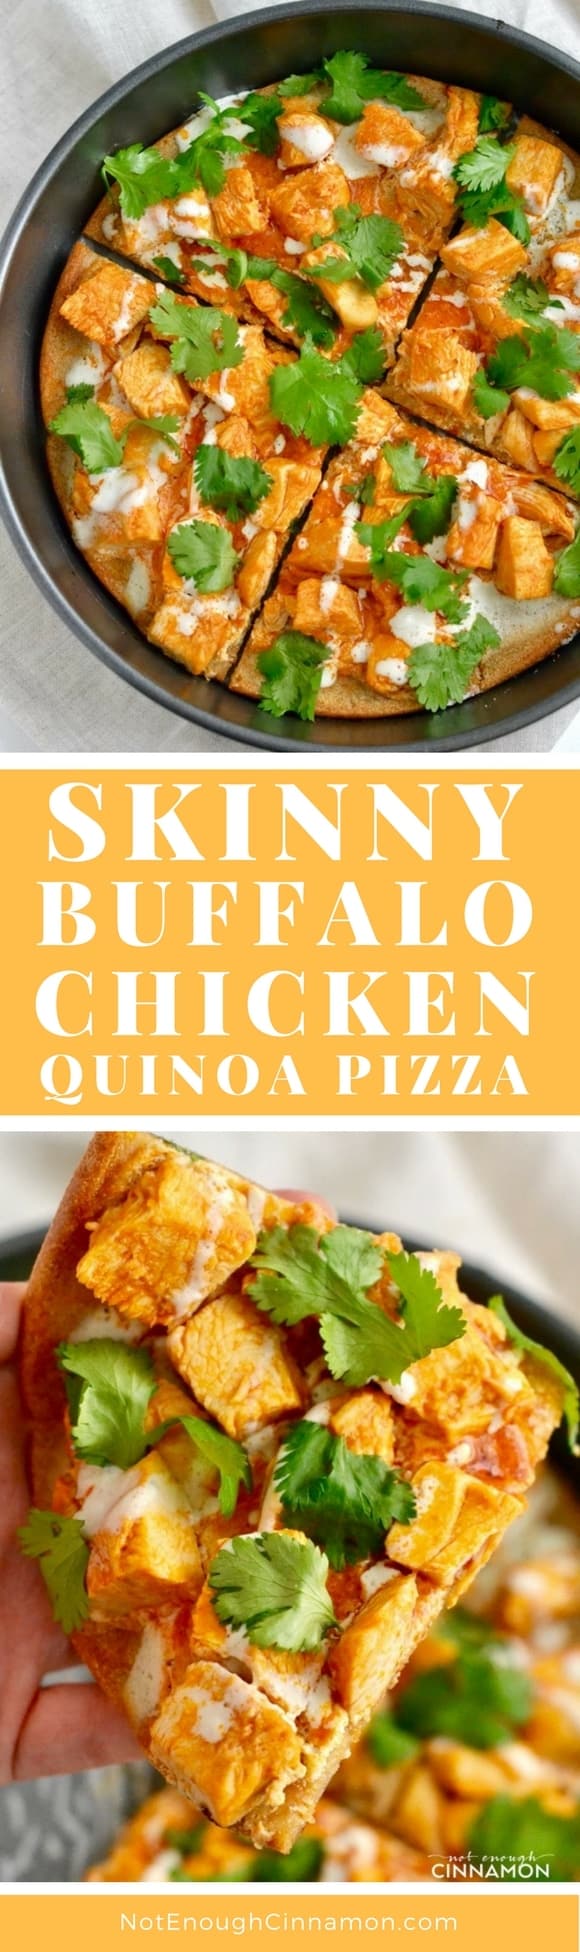 Skinny Buffalo Chicken Pizza with Quinoa Crust | Not Enough Cinnamon